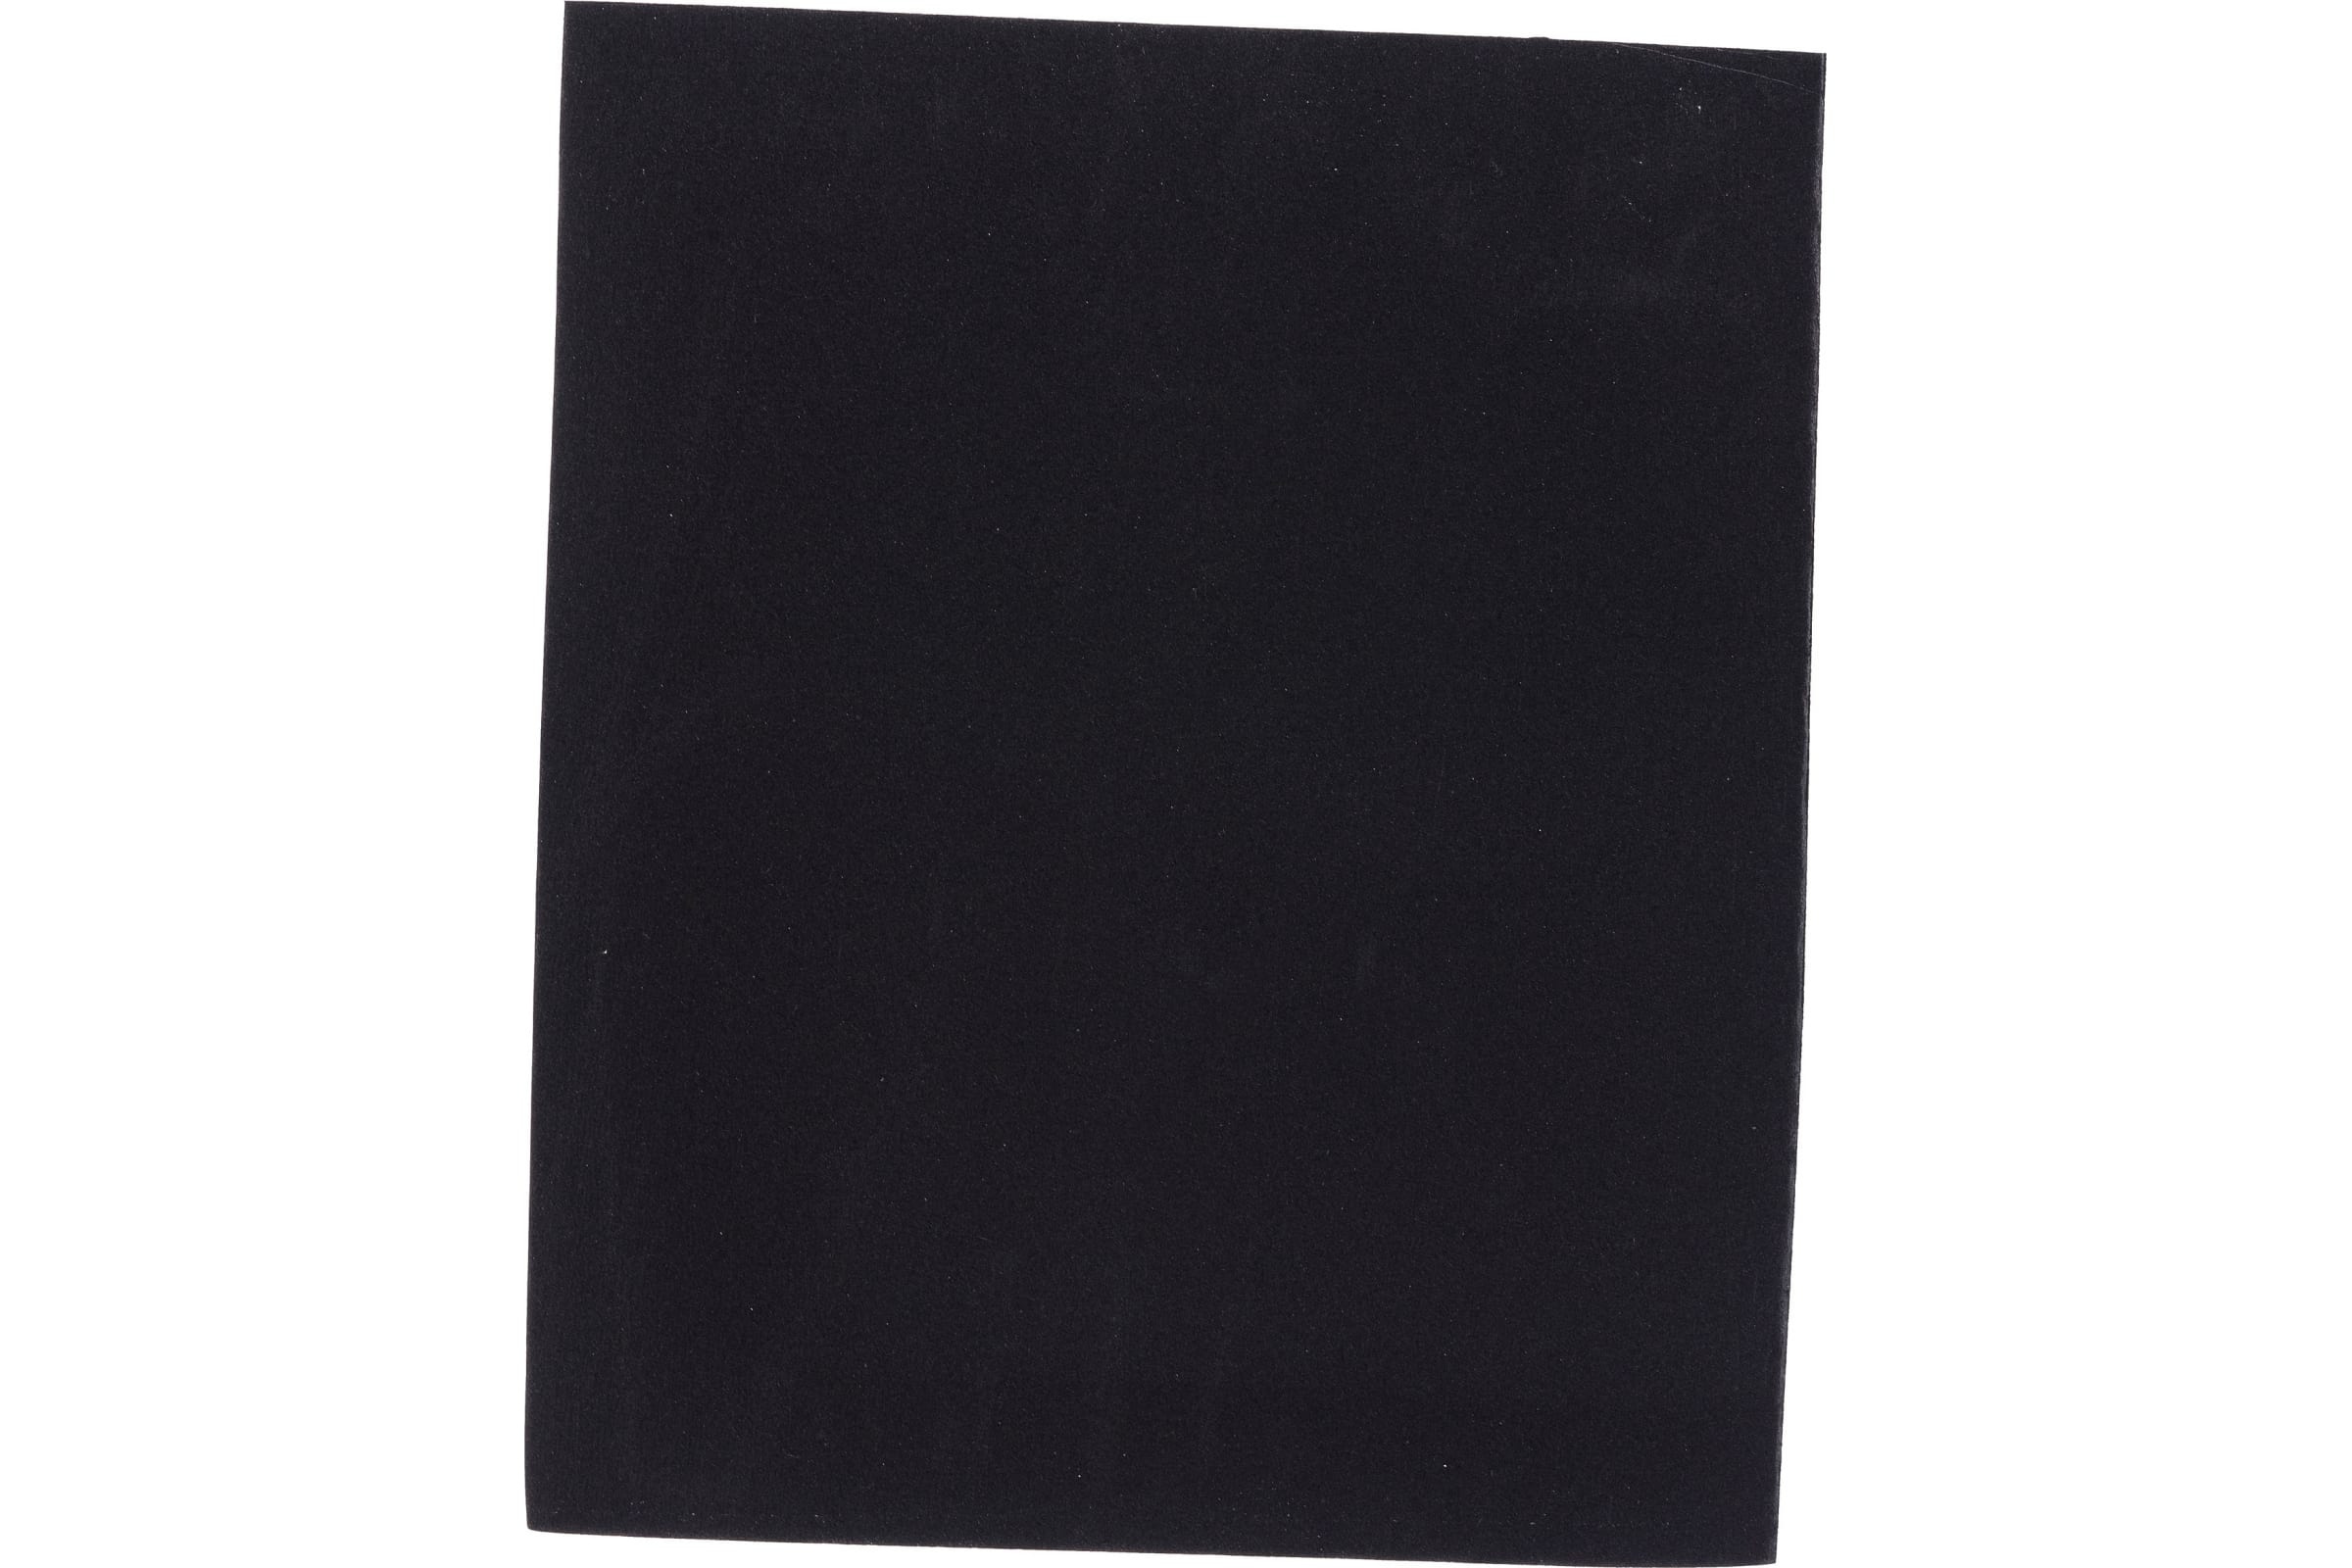 Наждачная бумага ZOLDER, P800, 10 шт наждачная бумага водостойкая fuji star fj hs p800